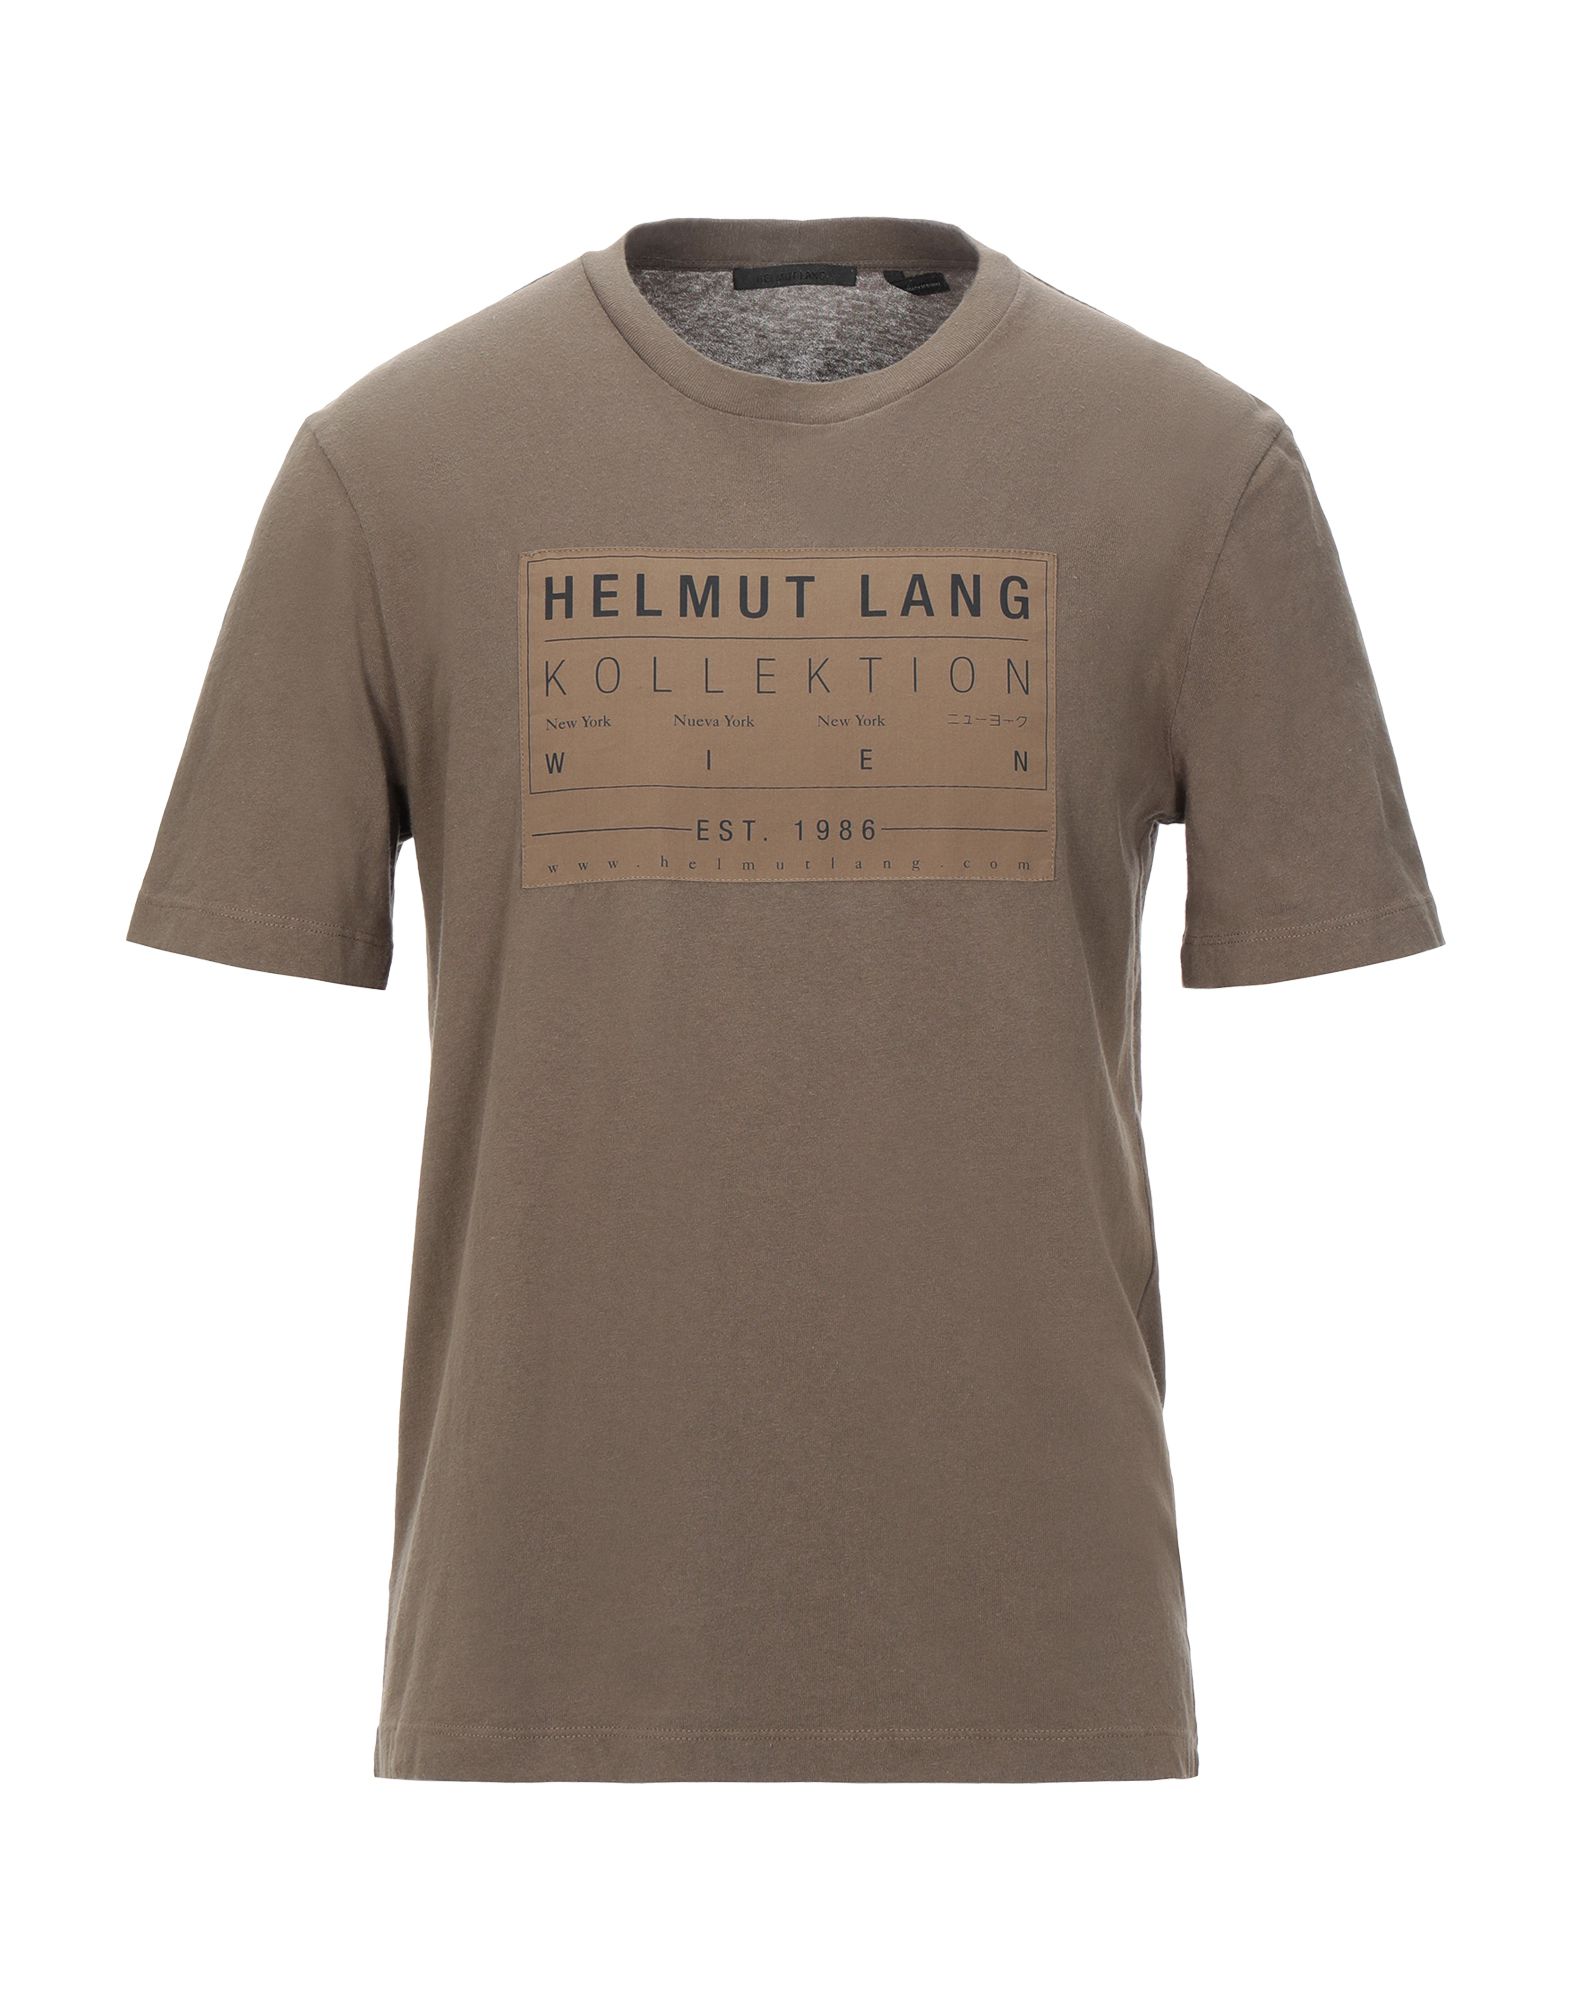 HELMUT LANG T-shirts Herren Militärgrün von HELMUT LANG